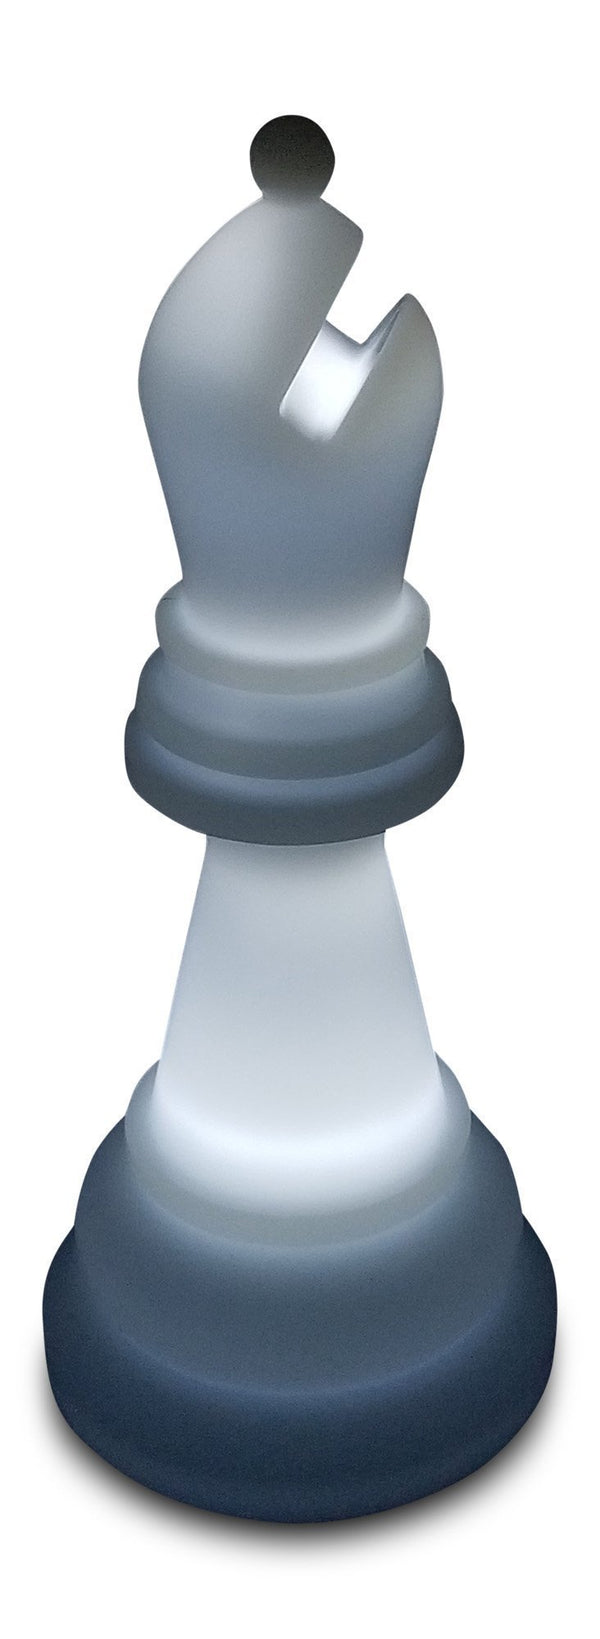 MegaChess 20 Inch Premium Plastic Bishop Light-Up Giant Chess Piece - White |  | GiantChessUSA